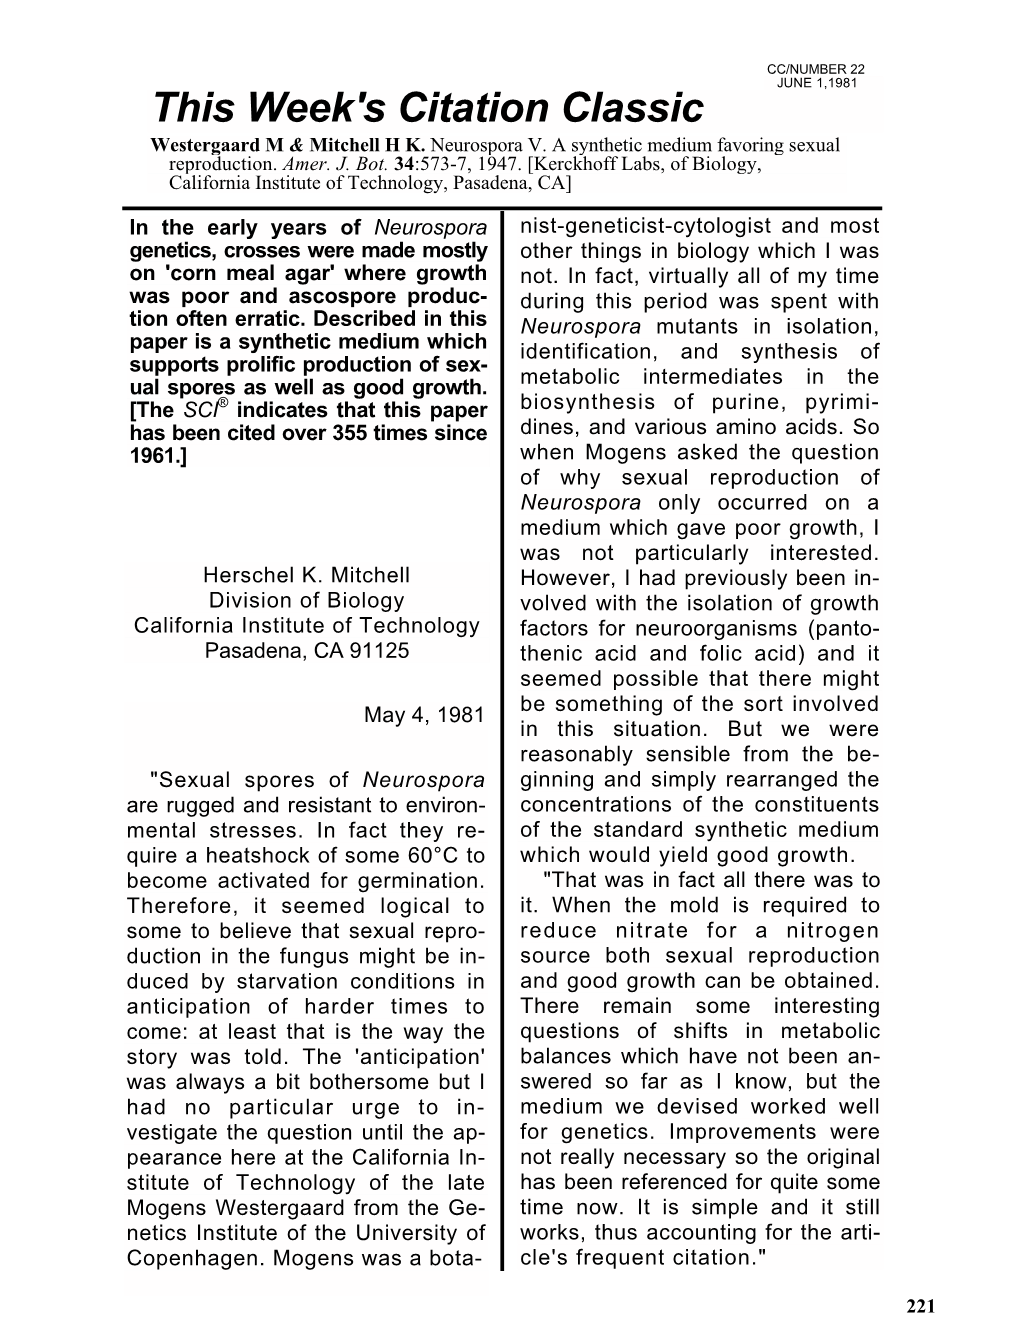 Westergaard M & Mitchell H K. Neurospora V. a Synthetic Medium